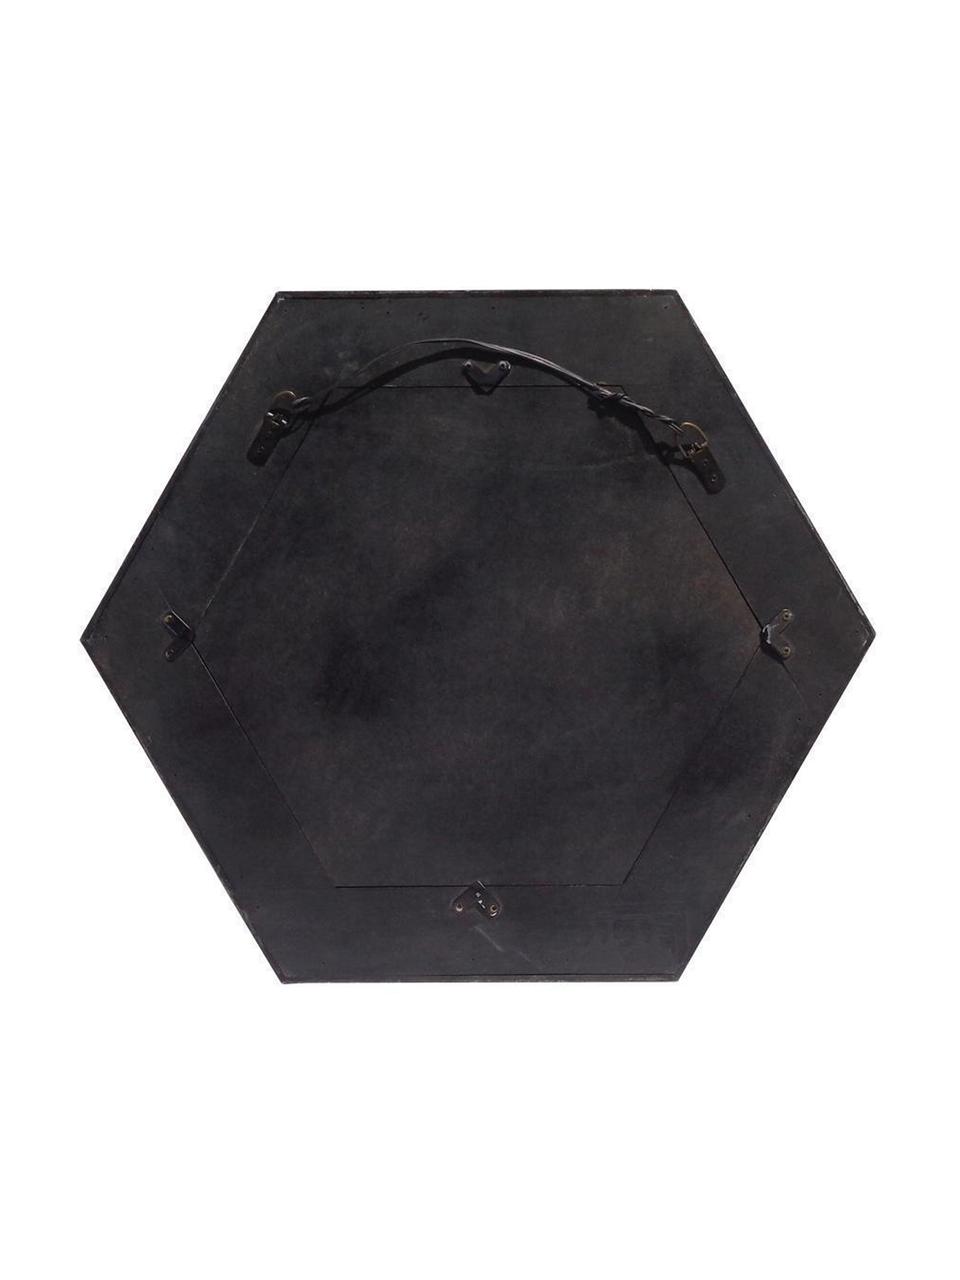 Espejo de pared de metal Hexagonal, Espejo: cristal, Blanco, latón, An 53 x Al 53 cm